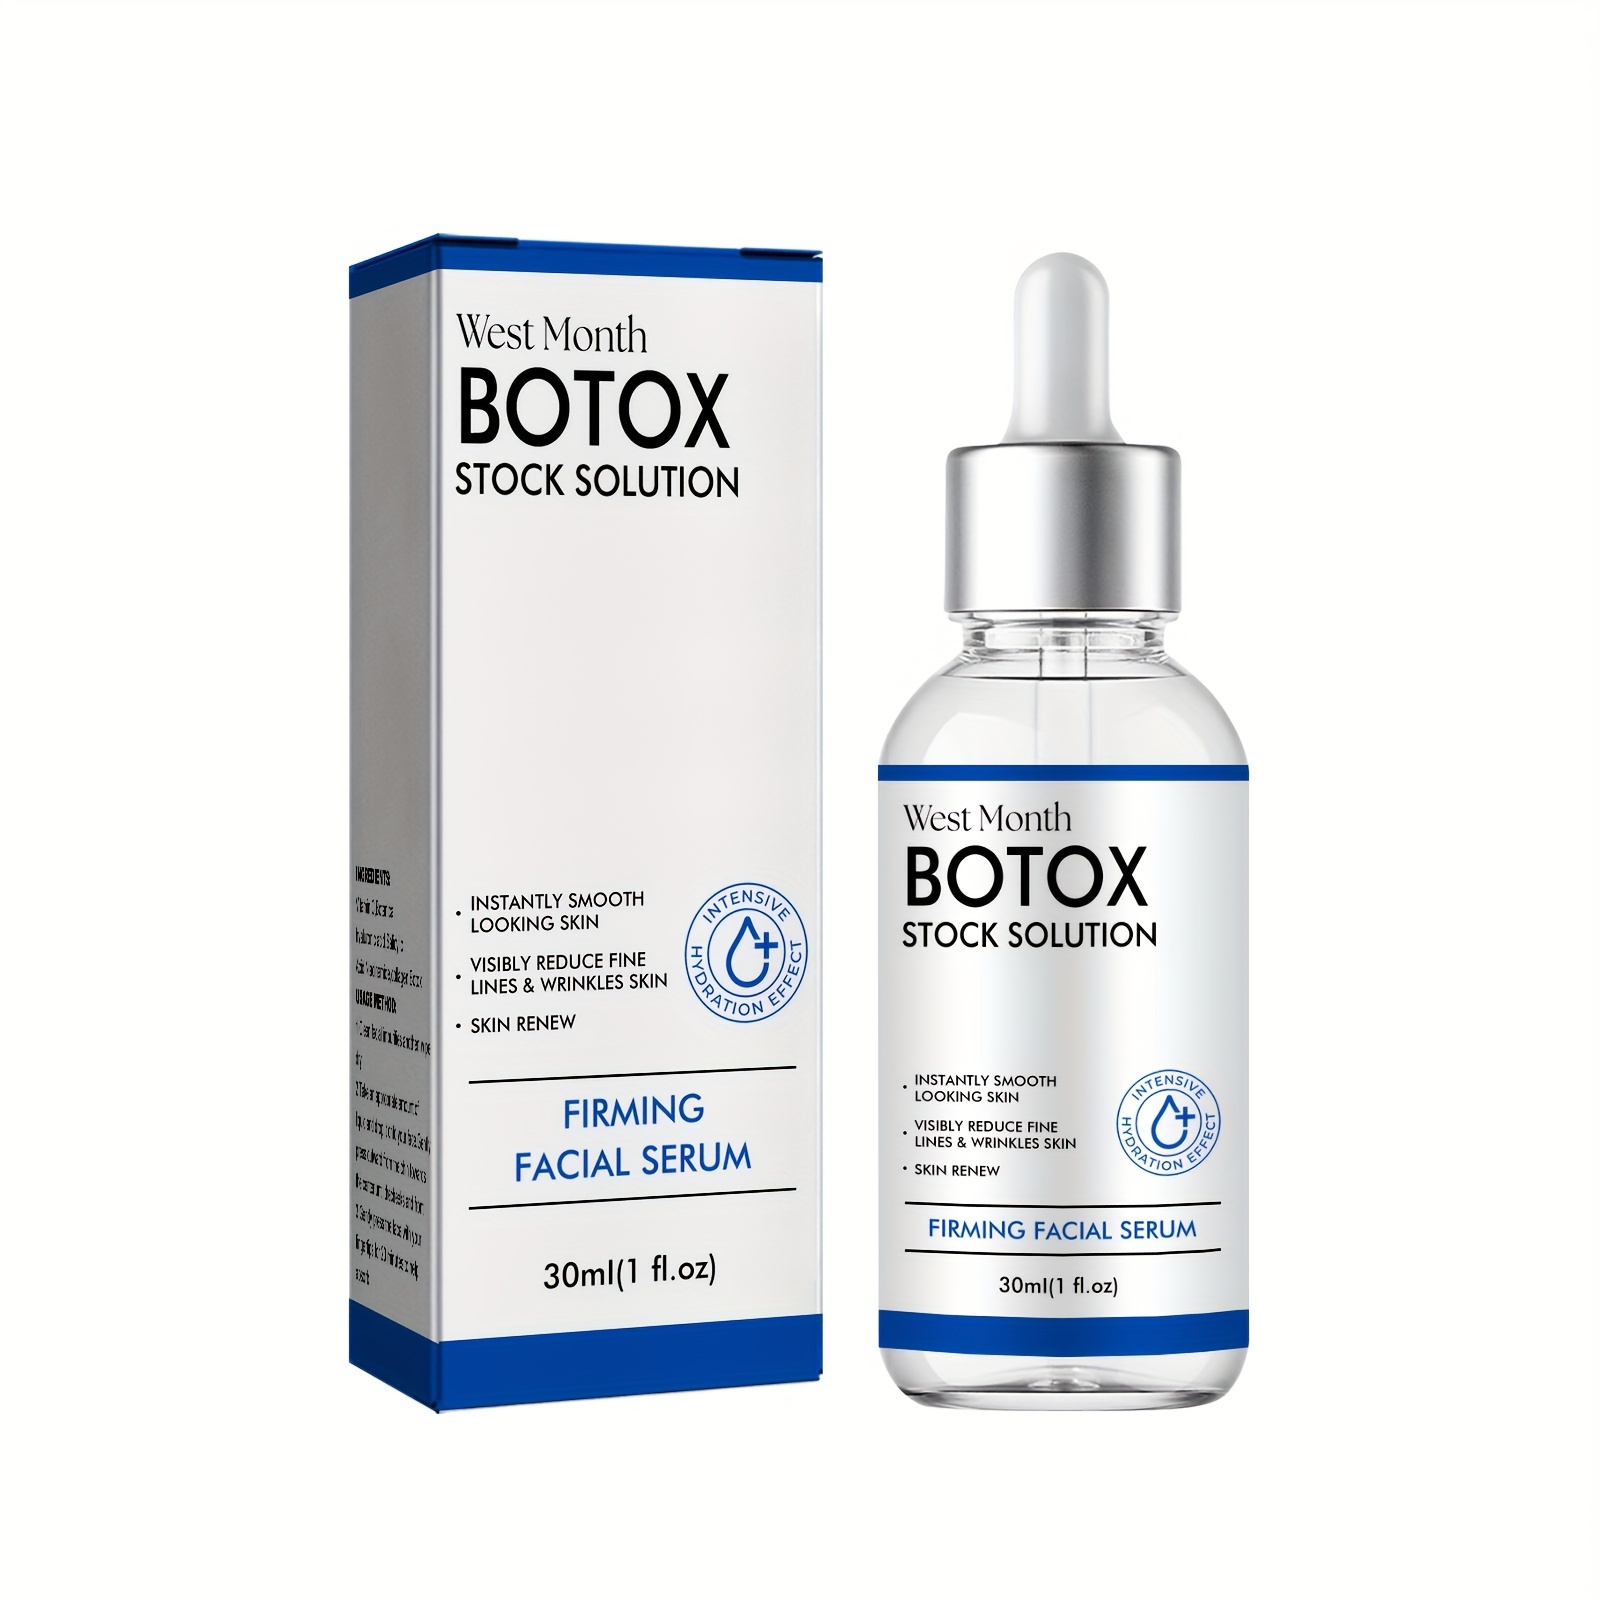 

Stock Solution Facial Serum, 30ml, Hyaluronic Acid, Niacinamide, Collagen, Intense Wrinkle Smoothing, Hydrating & Nourishing Skin Care